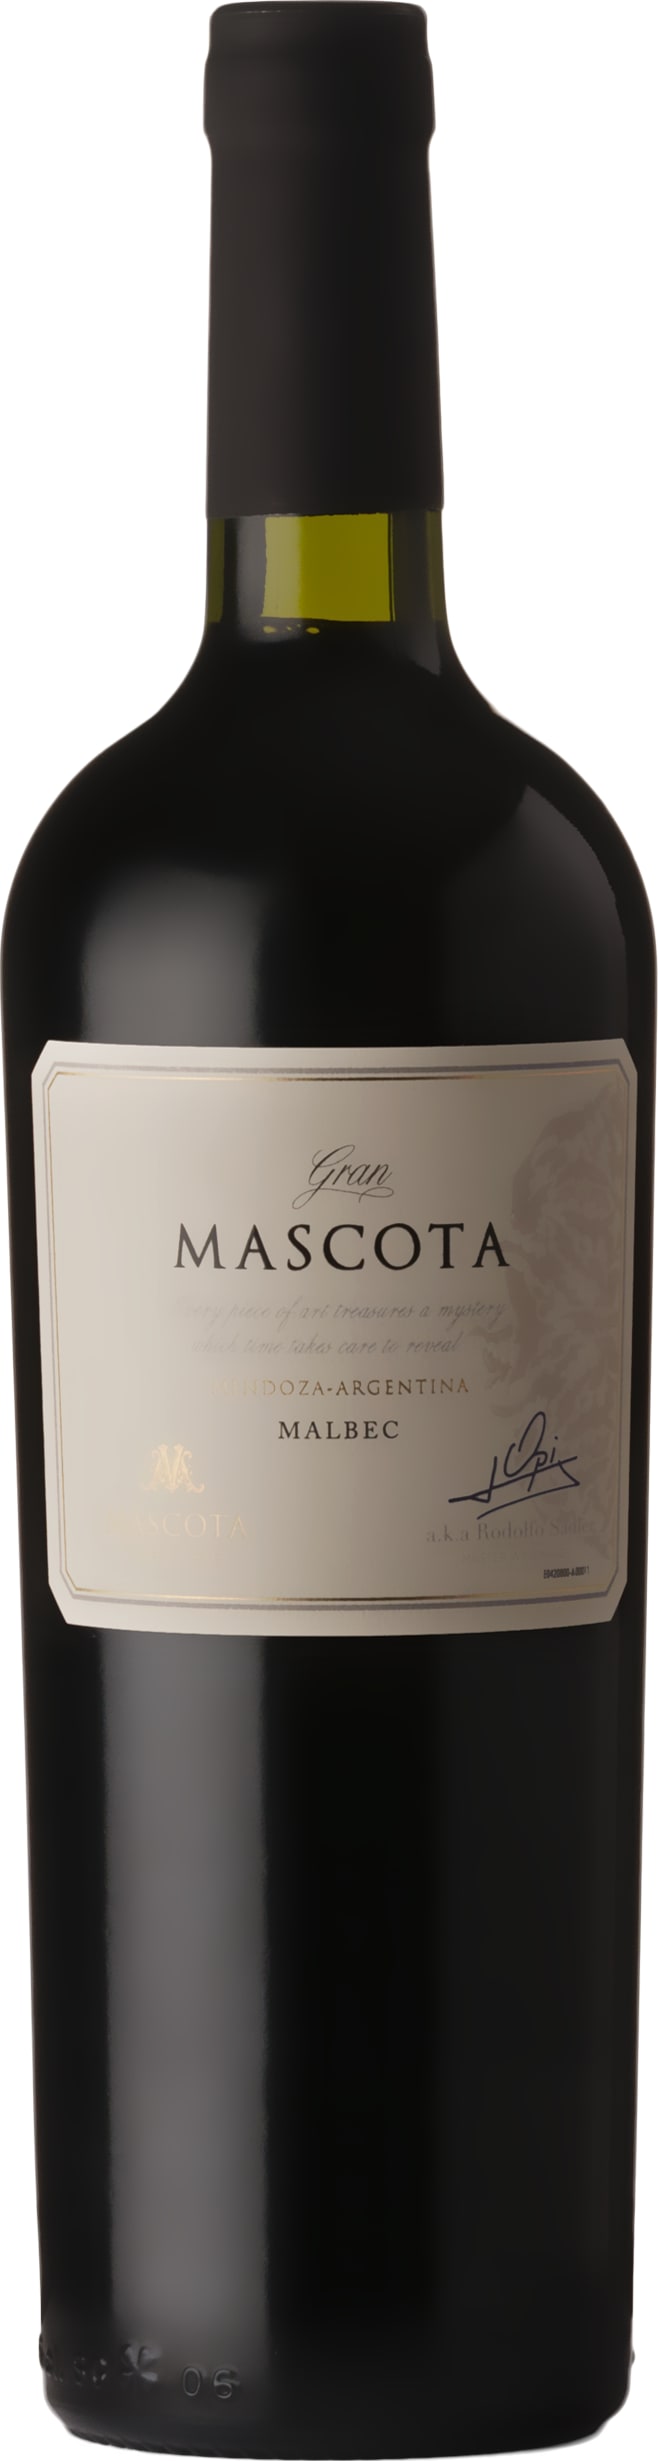 La Mascota Gran Mascota Malbec 2021 75cl - Buy La Mascota Wines from GREAT WINES DIRECT wine shop